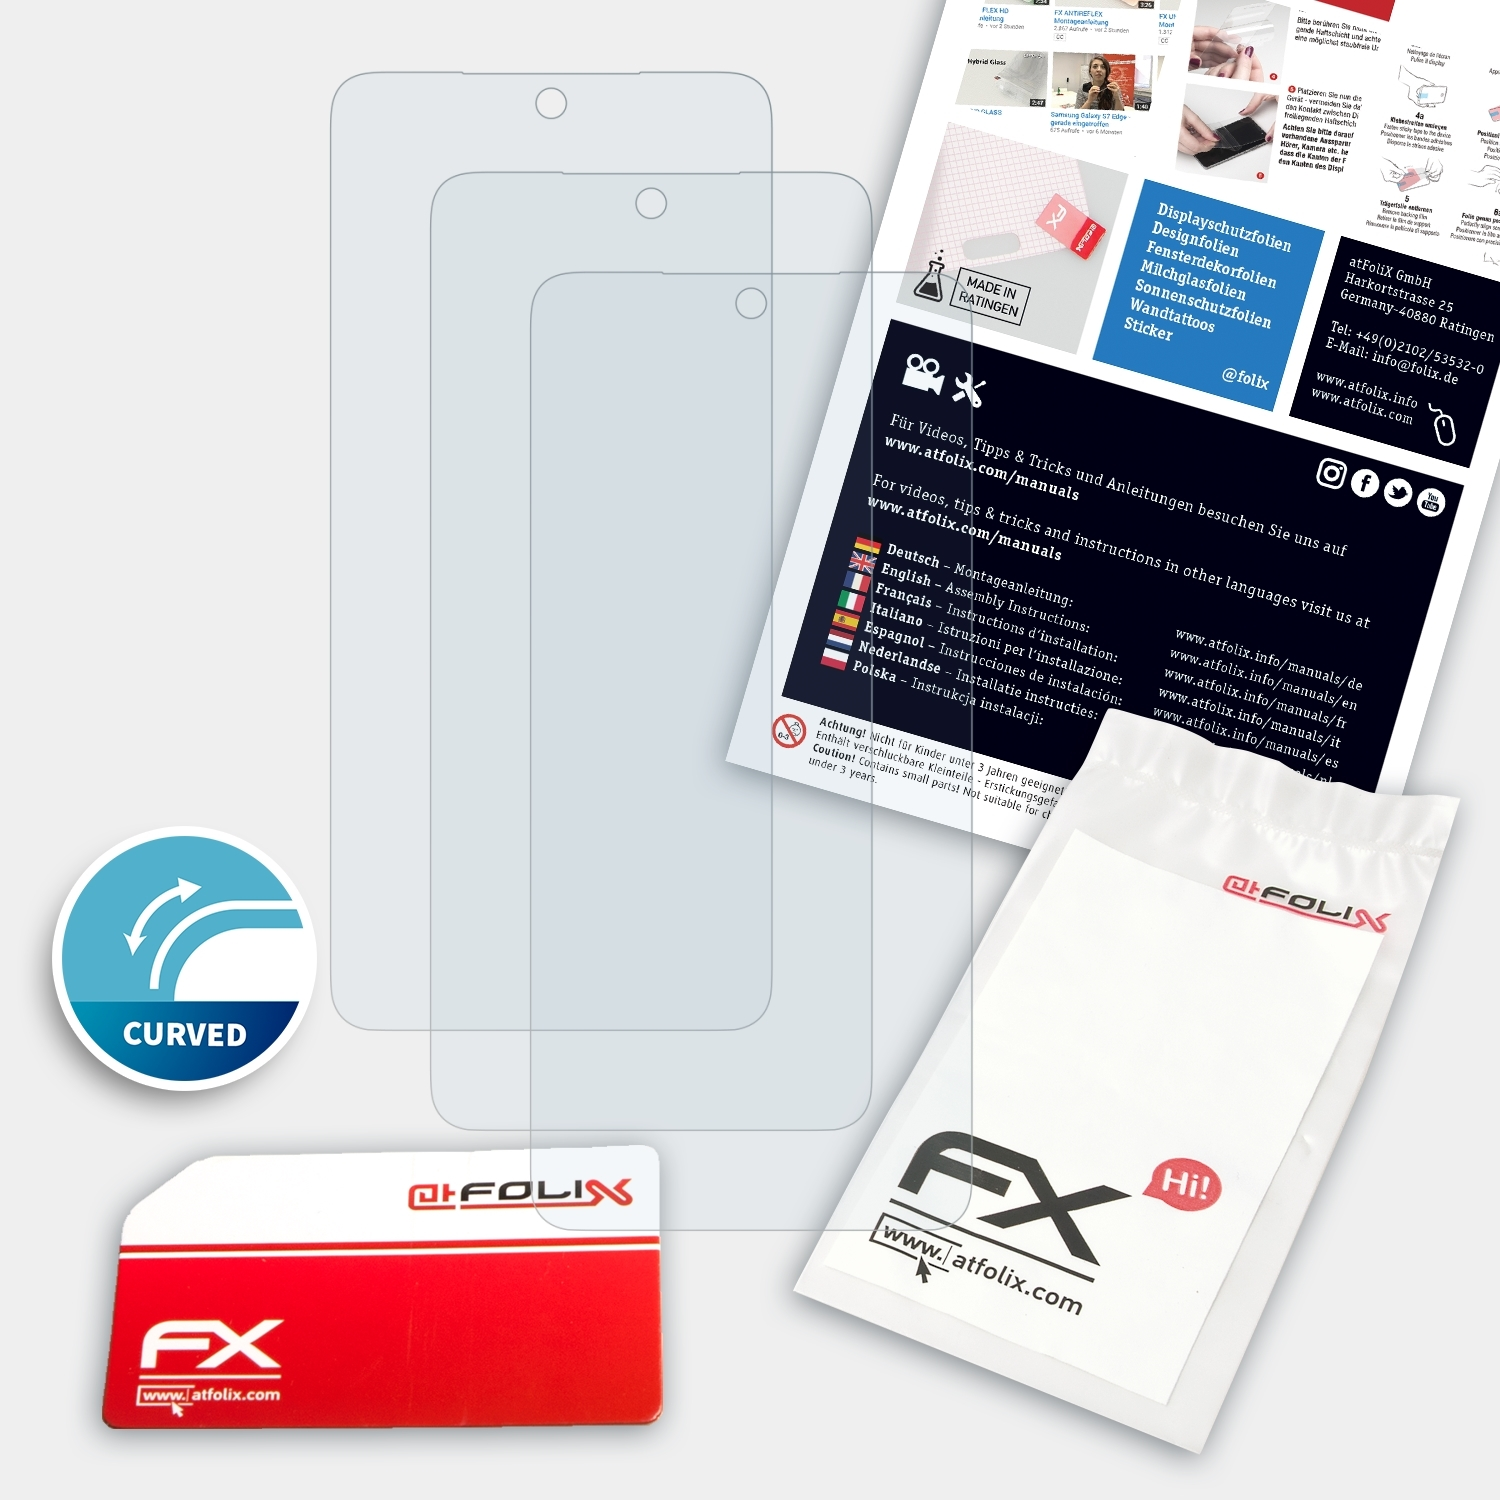 ATFOLIX 3x FX-ActiFleX Pro) X60 Displayschutz(für Vivo